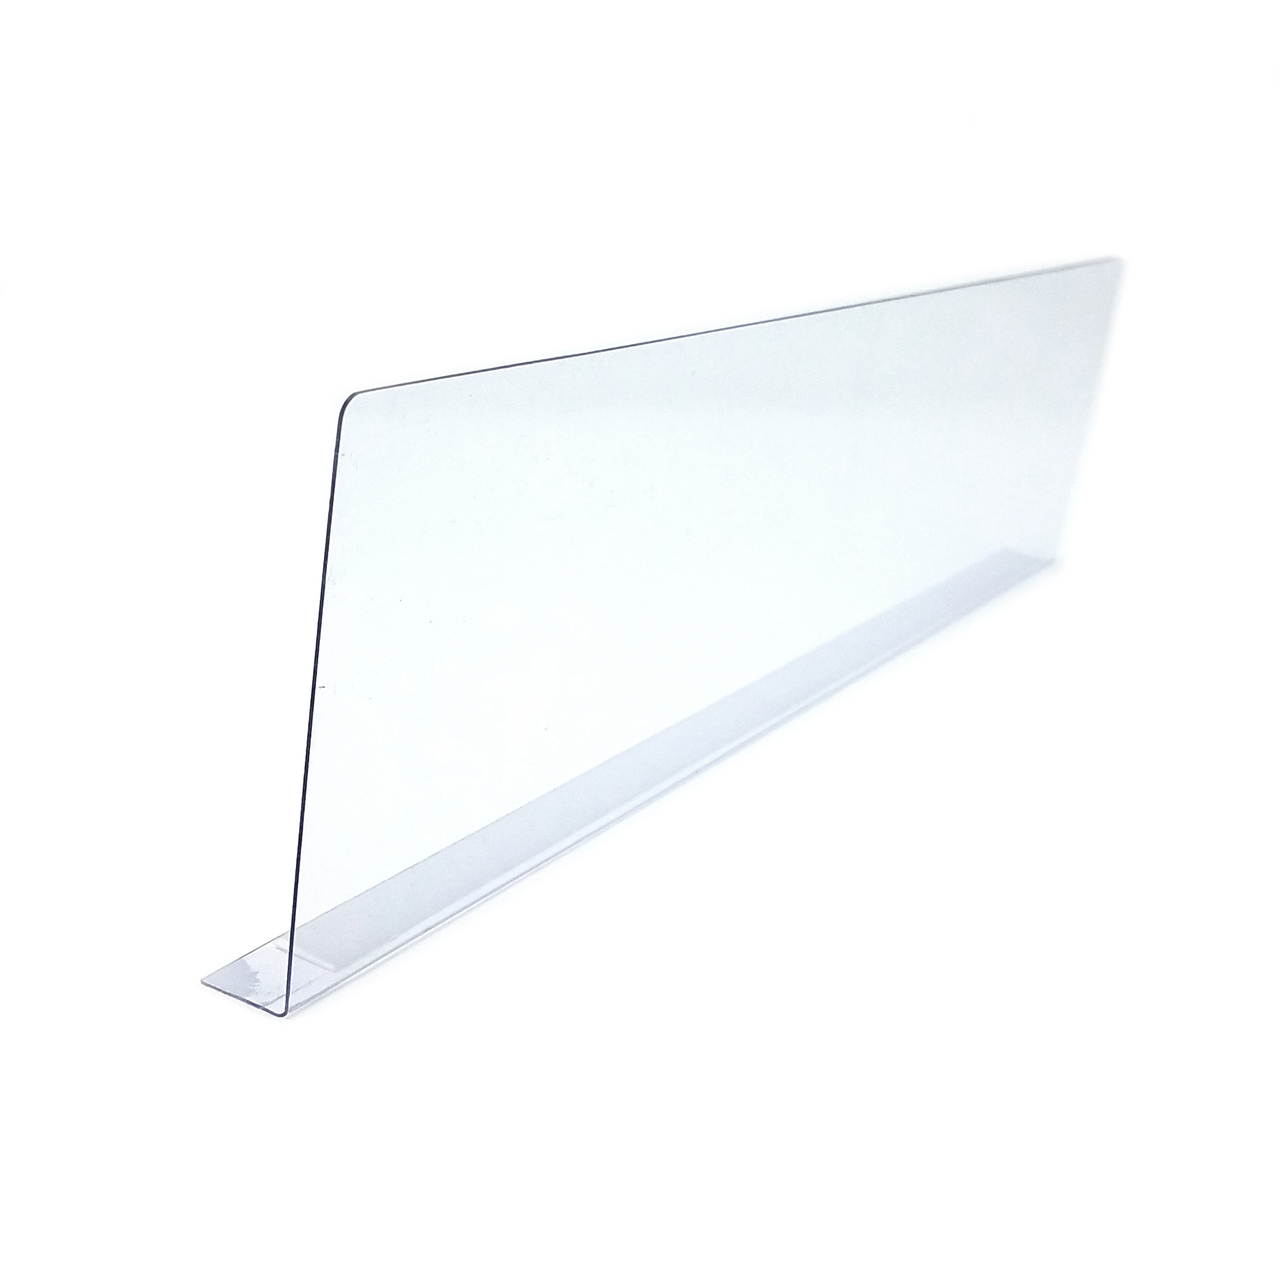 12 L Clear Self Adhesive Plastic Shelf Divider - Store Fixtures